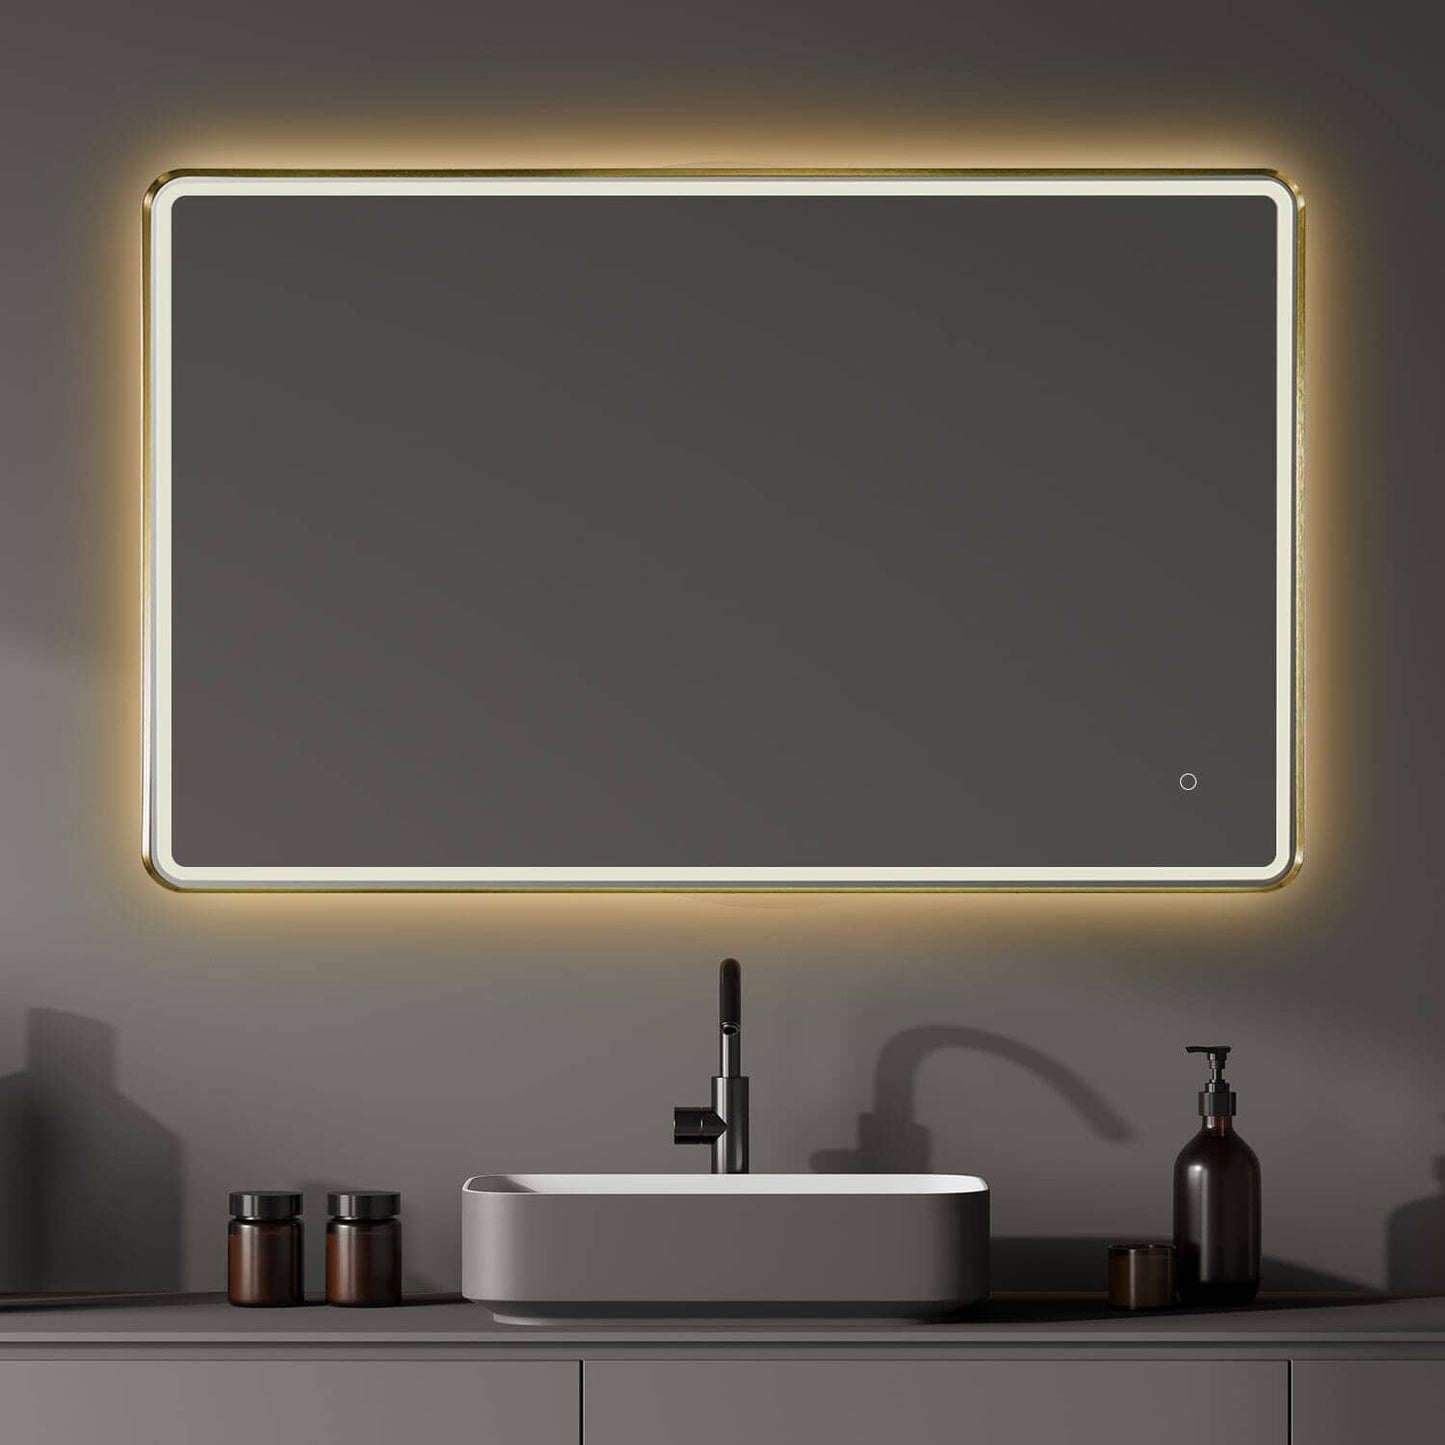 LED Bathroom Mirror - Altair Viaggi 48W-30H - 753048-LED-GF